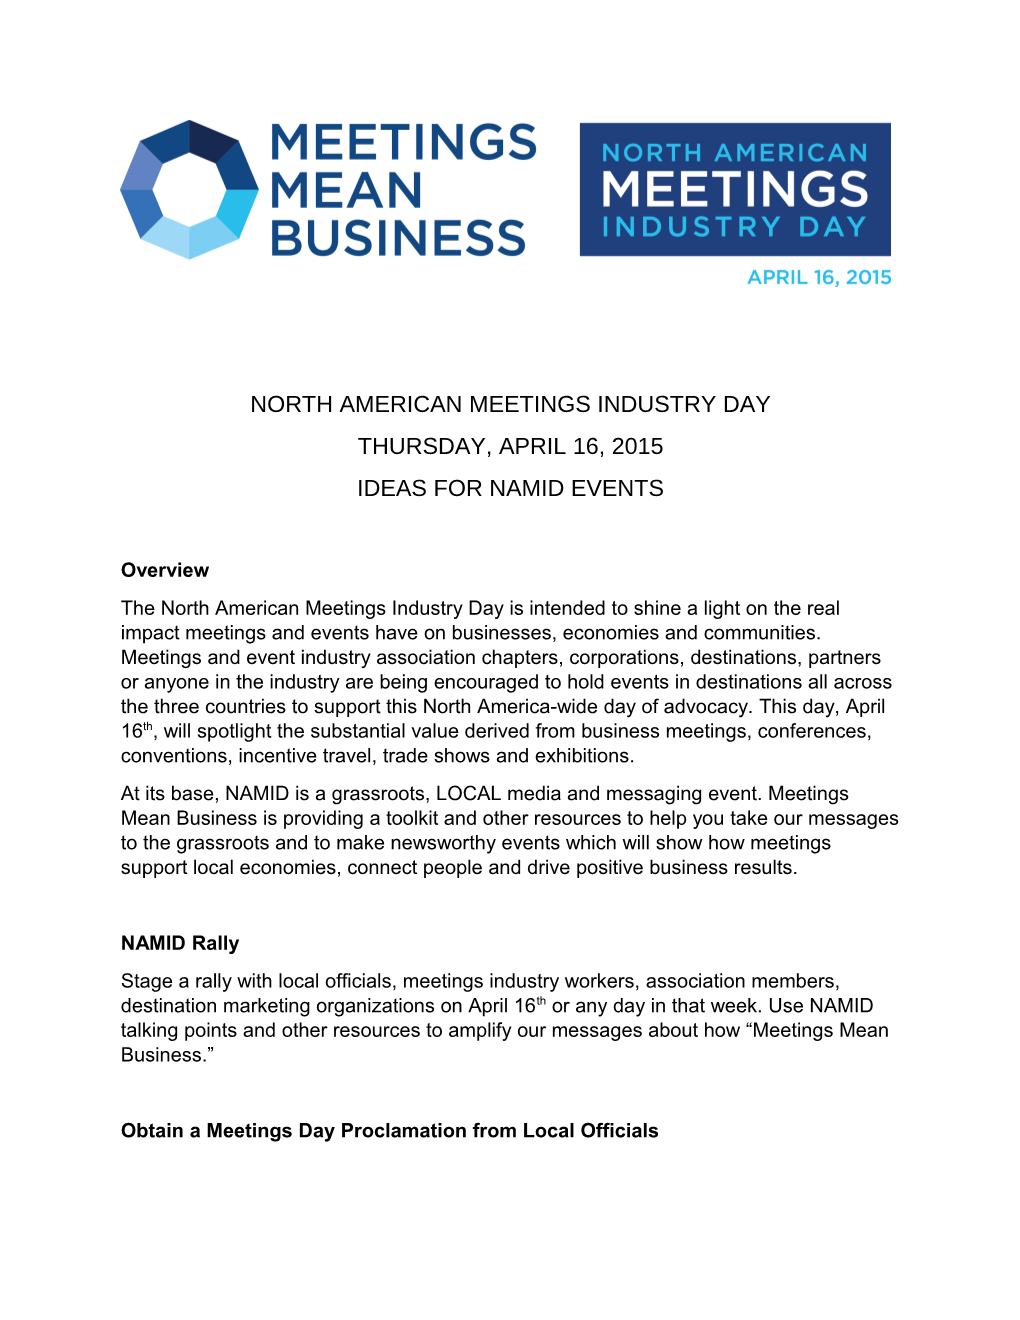 North American Meetings Industry Day